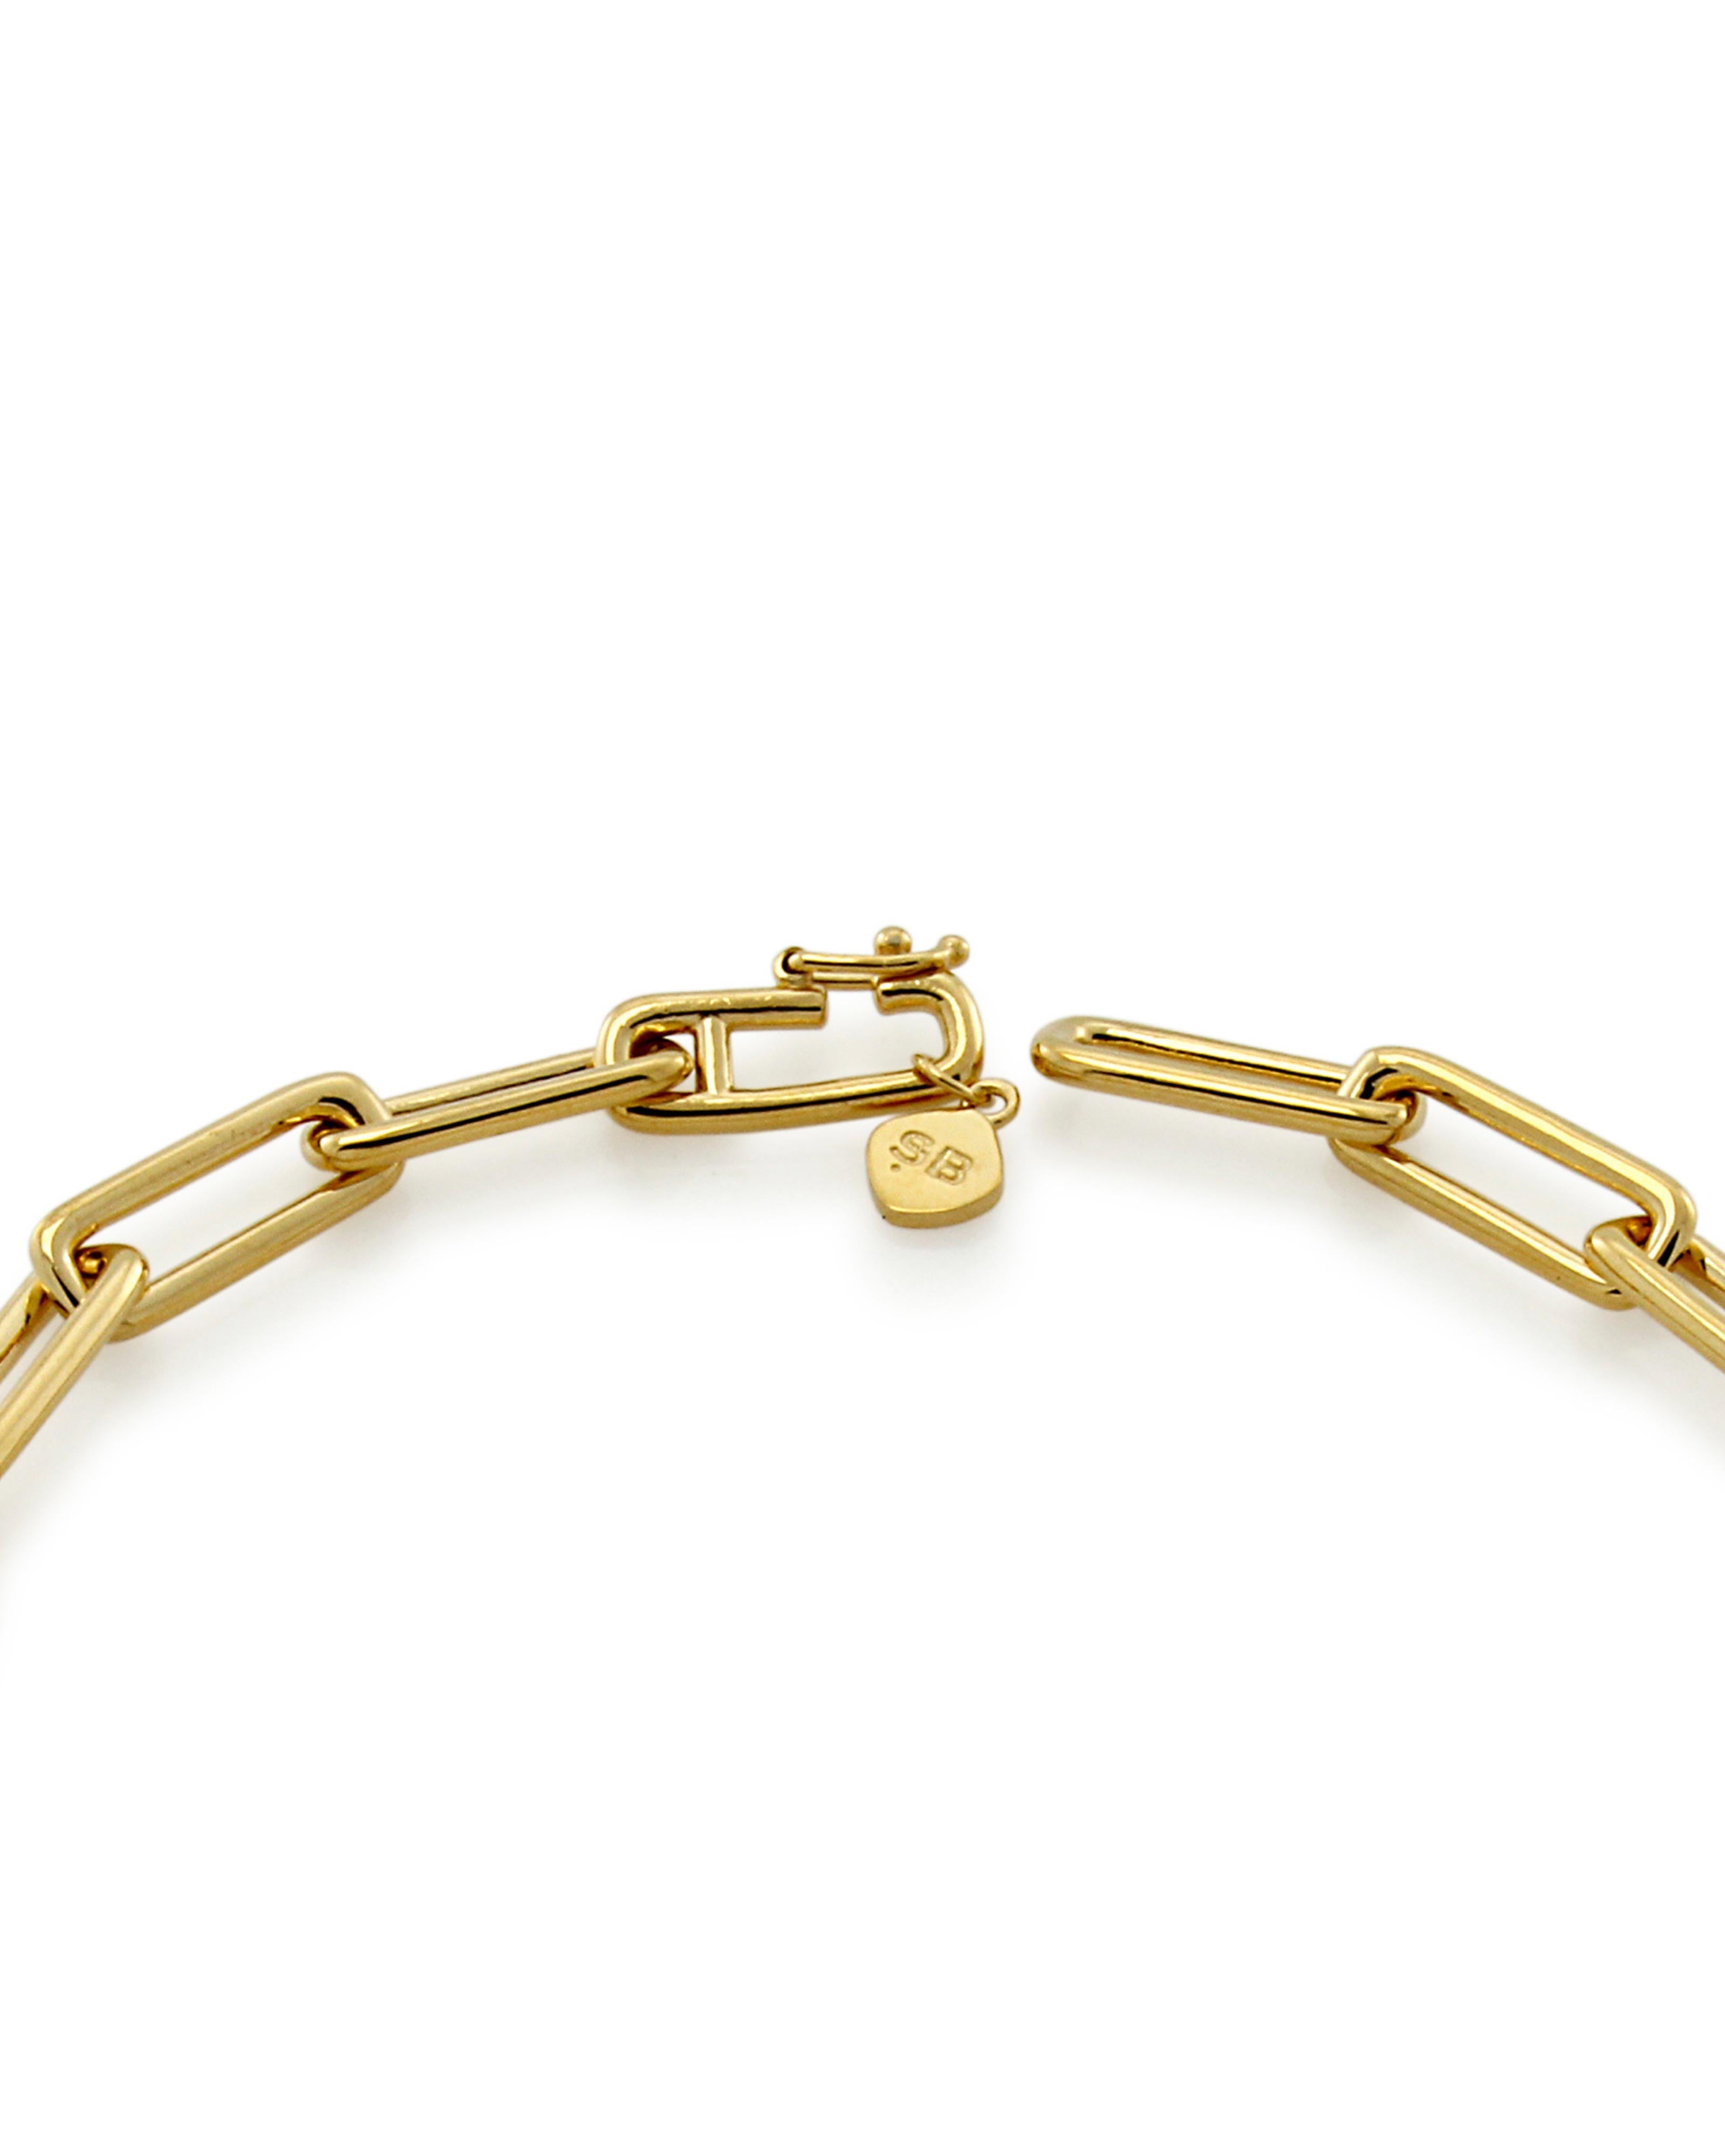 sener-besim-chunky-chain-necklace-gold